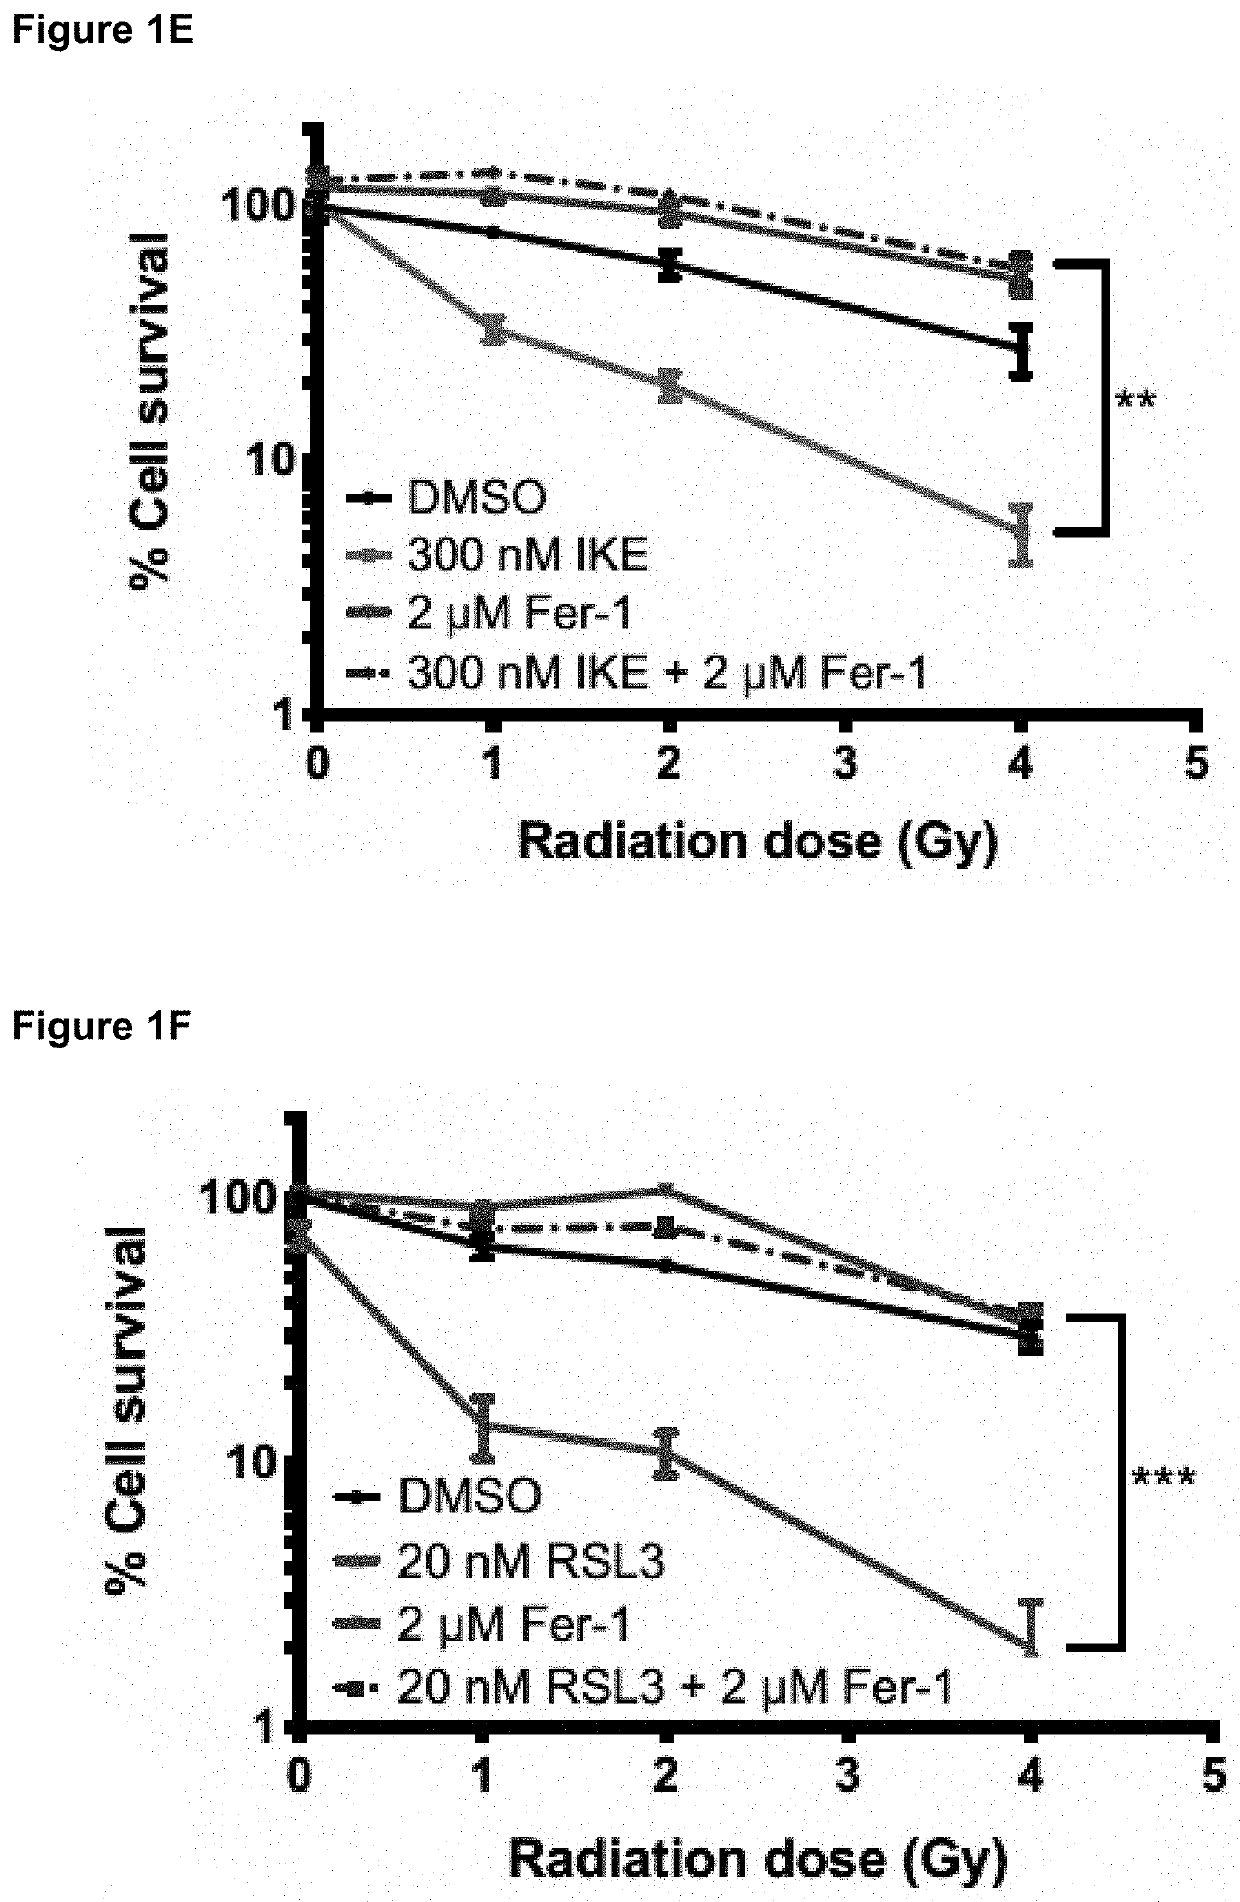 Methods of enhancing radiotherapy using ferroptosis inducers as radiosensitizers